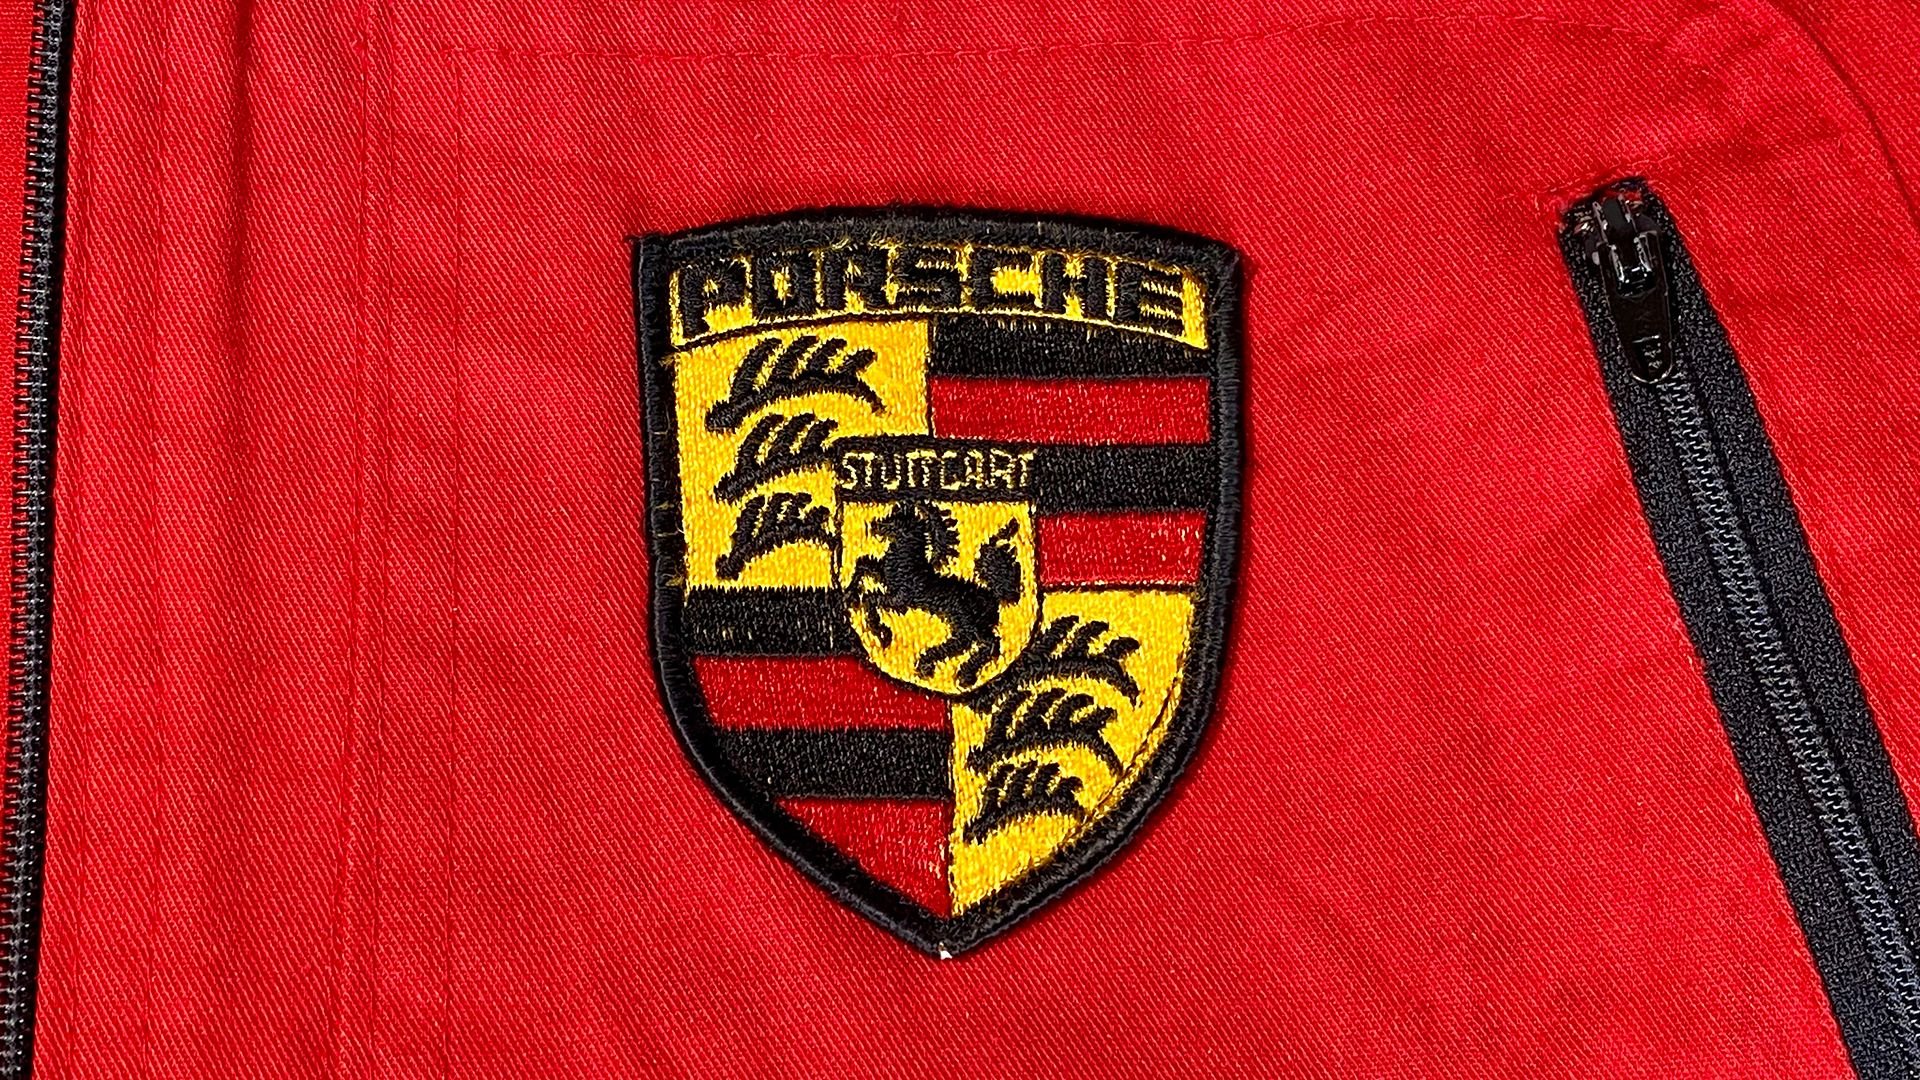 For Sale 1980s Assorted Porsche Clothing, Accessory "Werbegeshenke" Items, Porsche Design